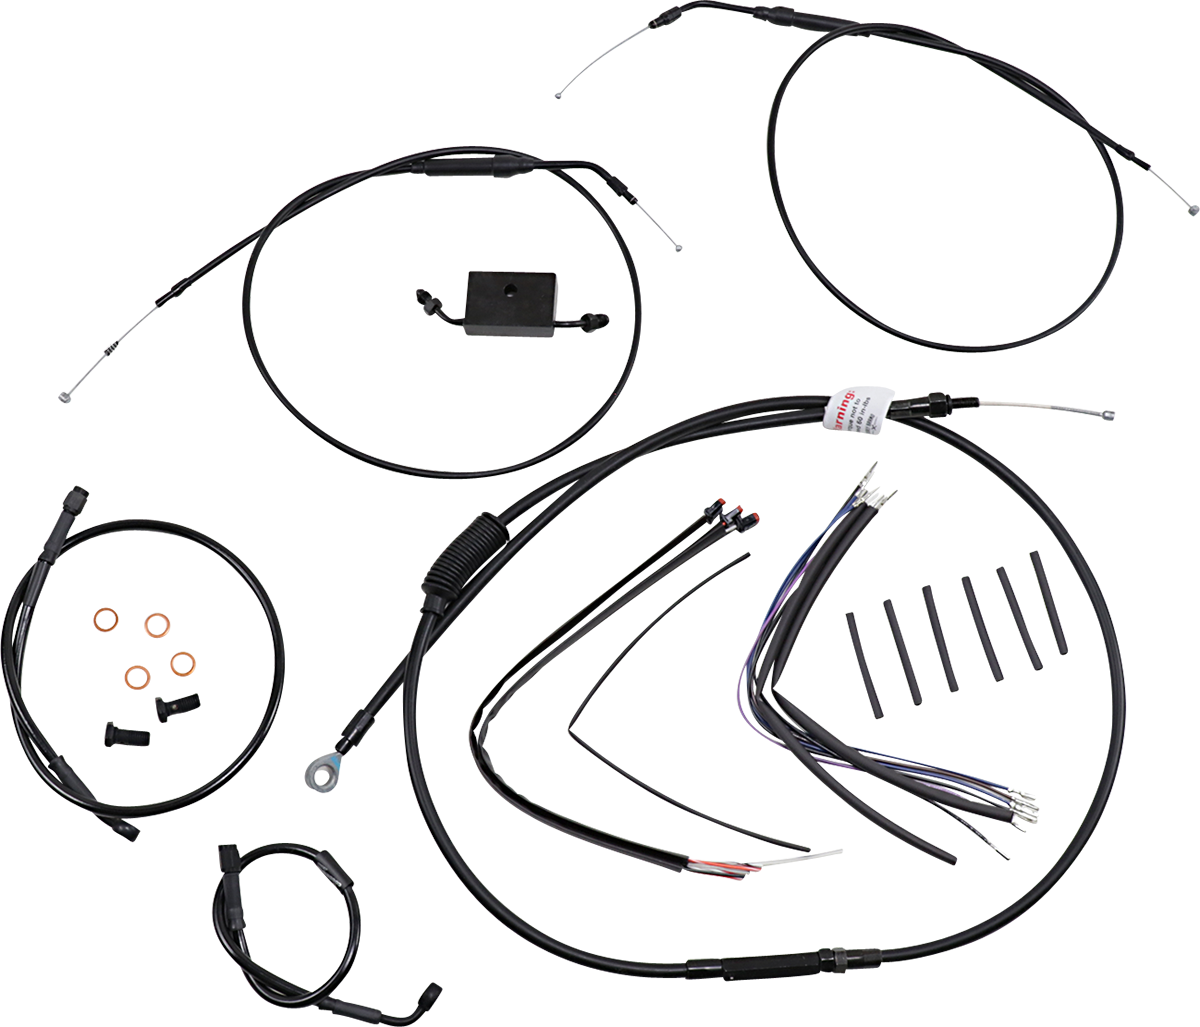 BURLY BRAND-Complete Handlebar Install Kits for T BARS / '04-'22 Sportster-Handlebar Install Kits-MetalCore Harley Supply